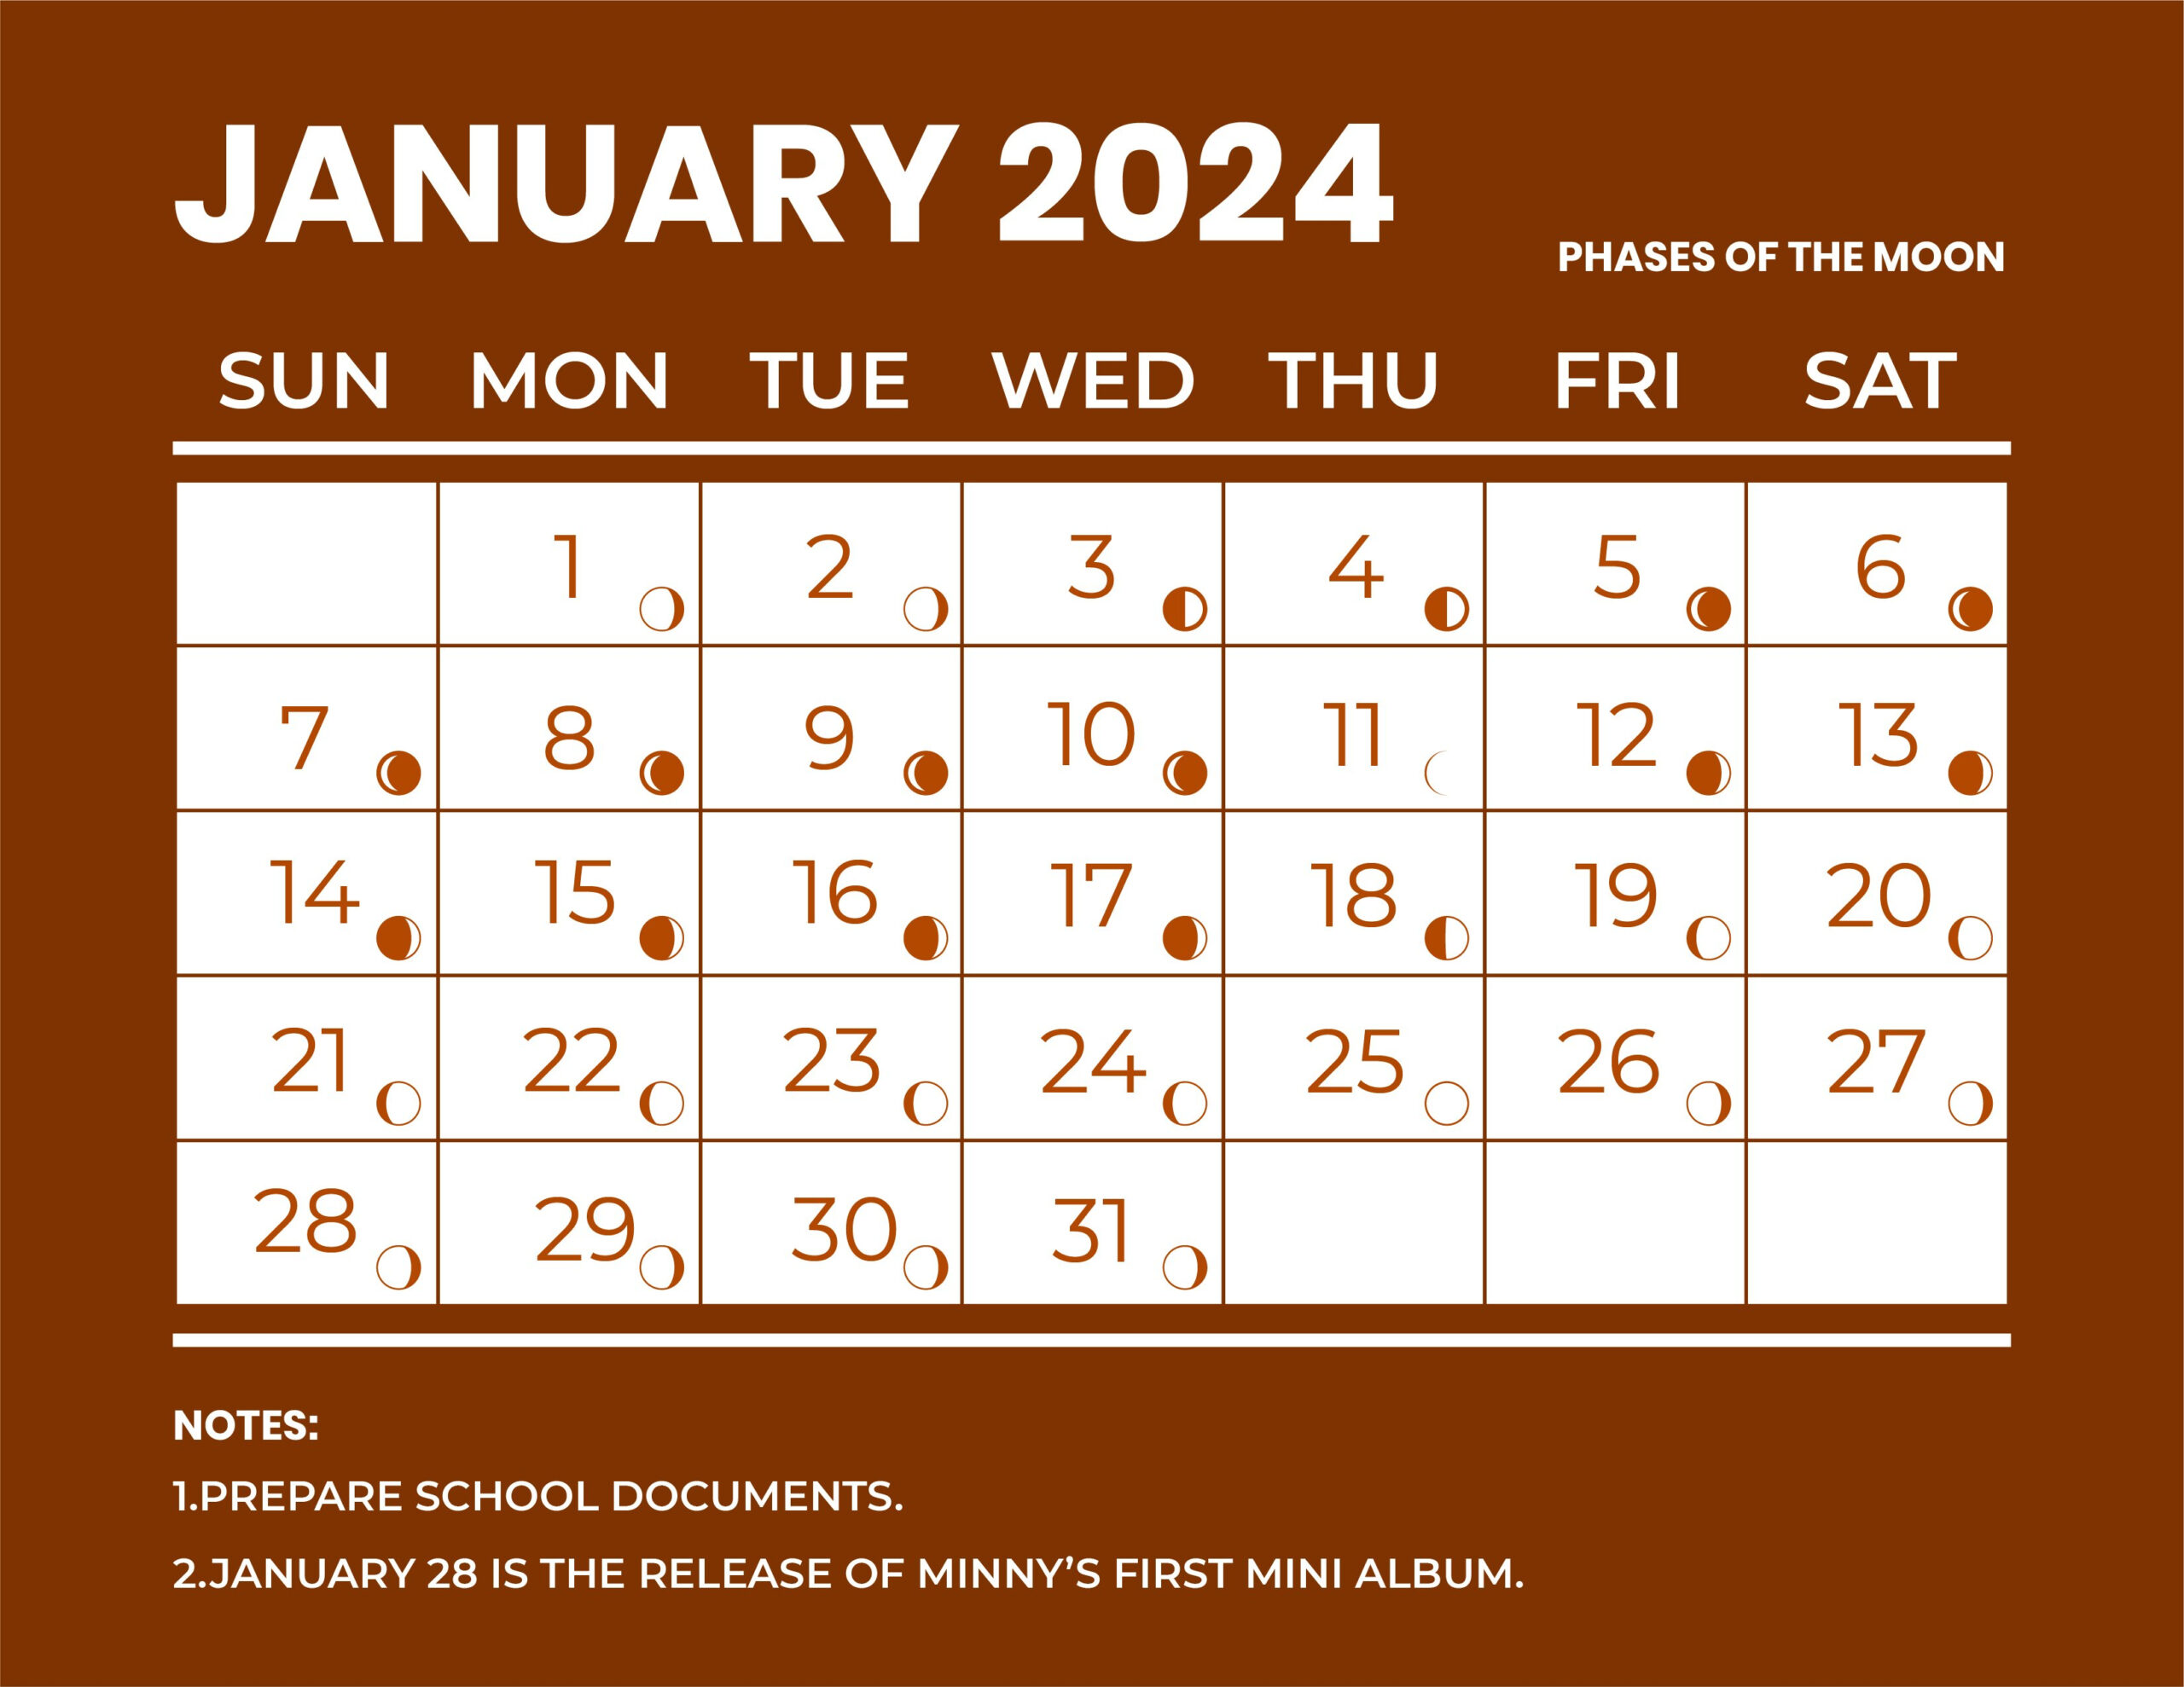 January 2024 Calendar With Moon Phases - Word, Illustrator, Eps for Moon Phase Calendar Printable 2024